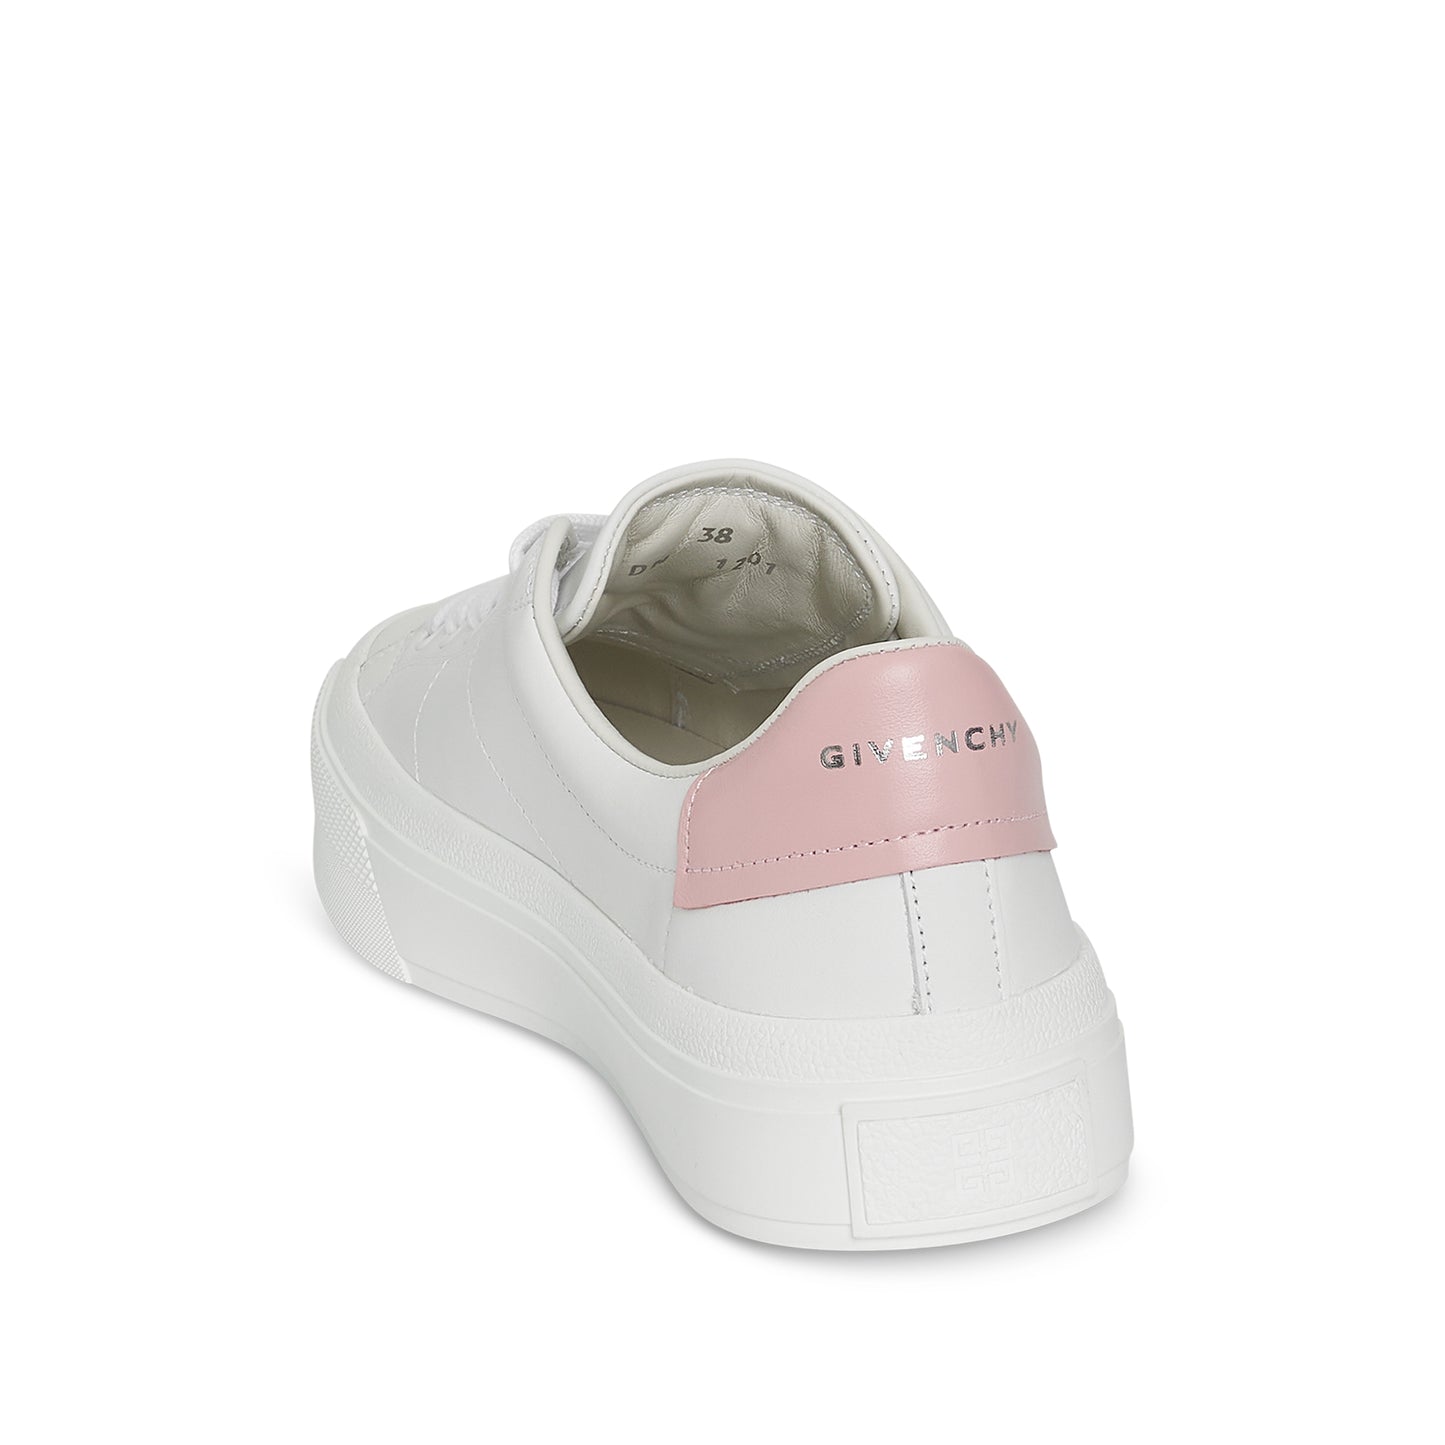 City Sport Sneaker in White/Pink